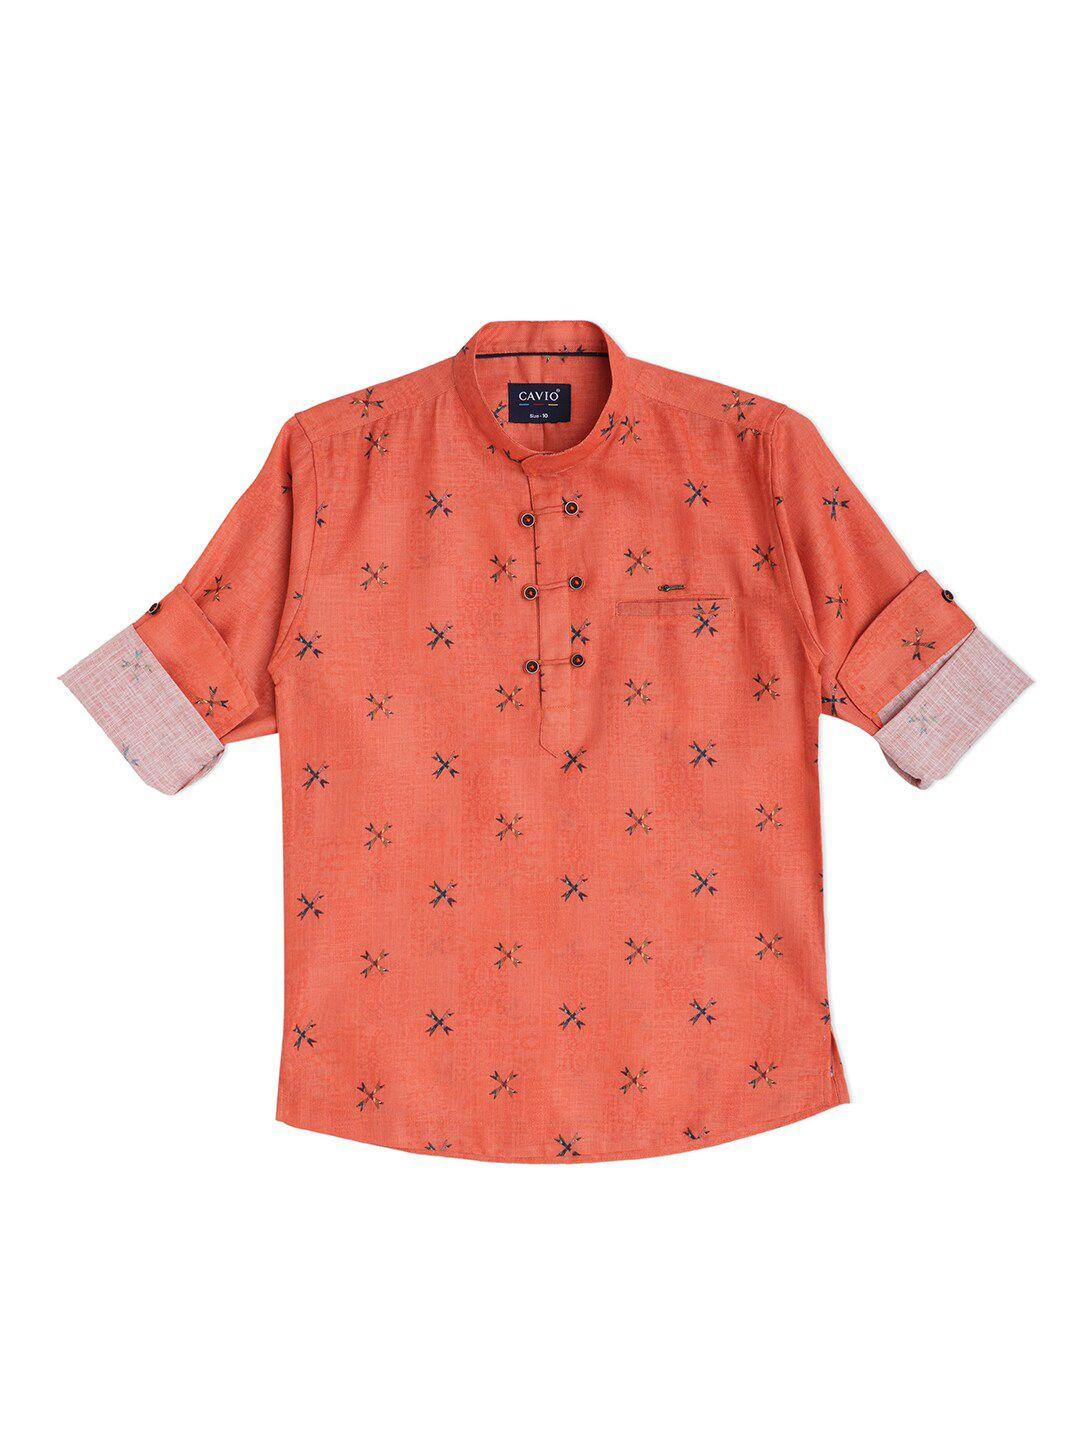 cavio boys orange floral printed casual shirt